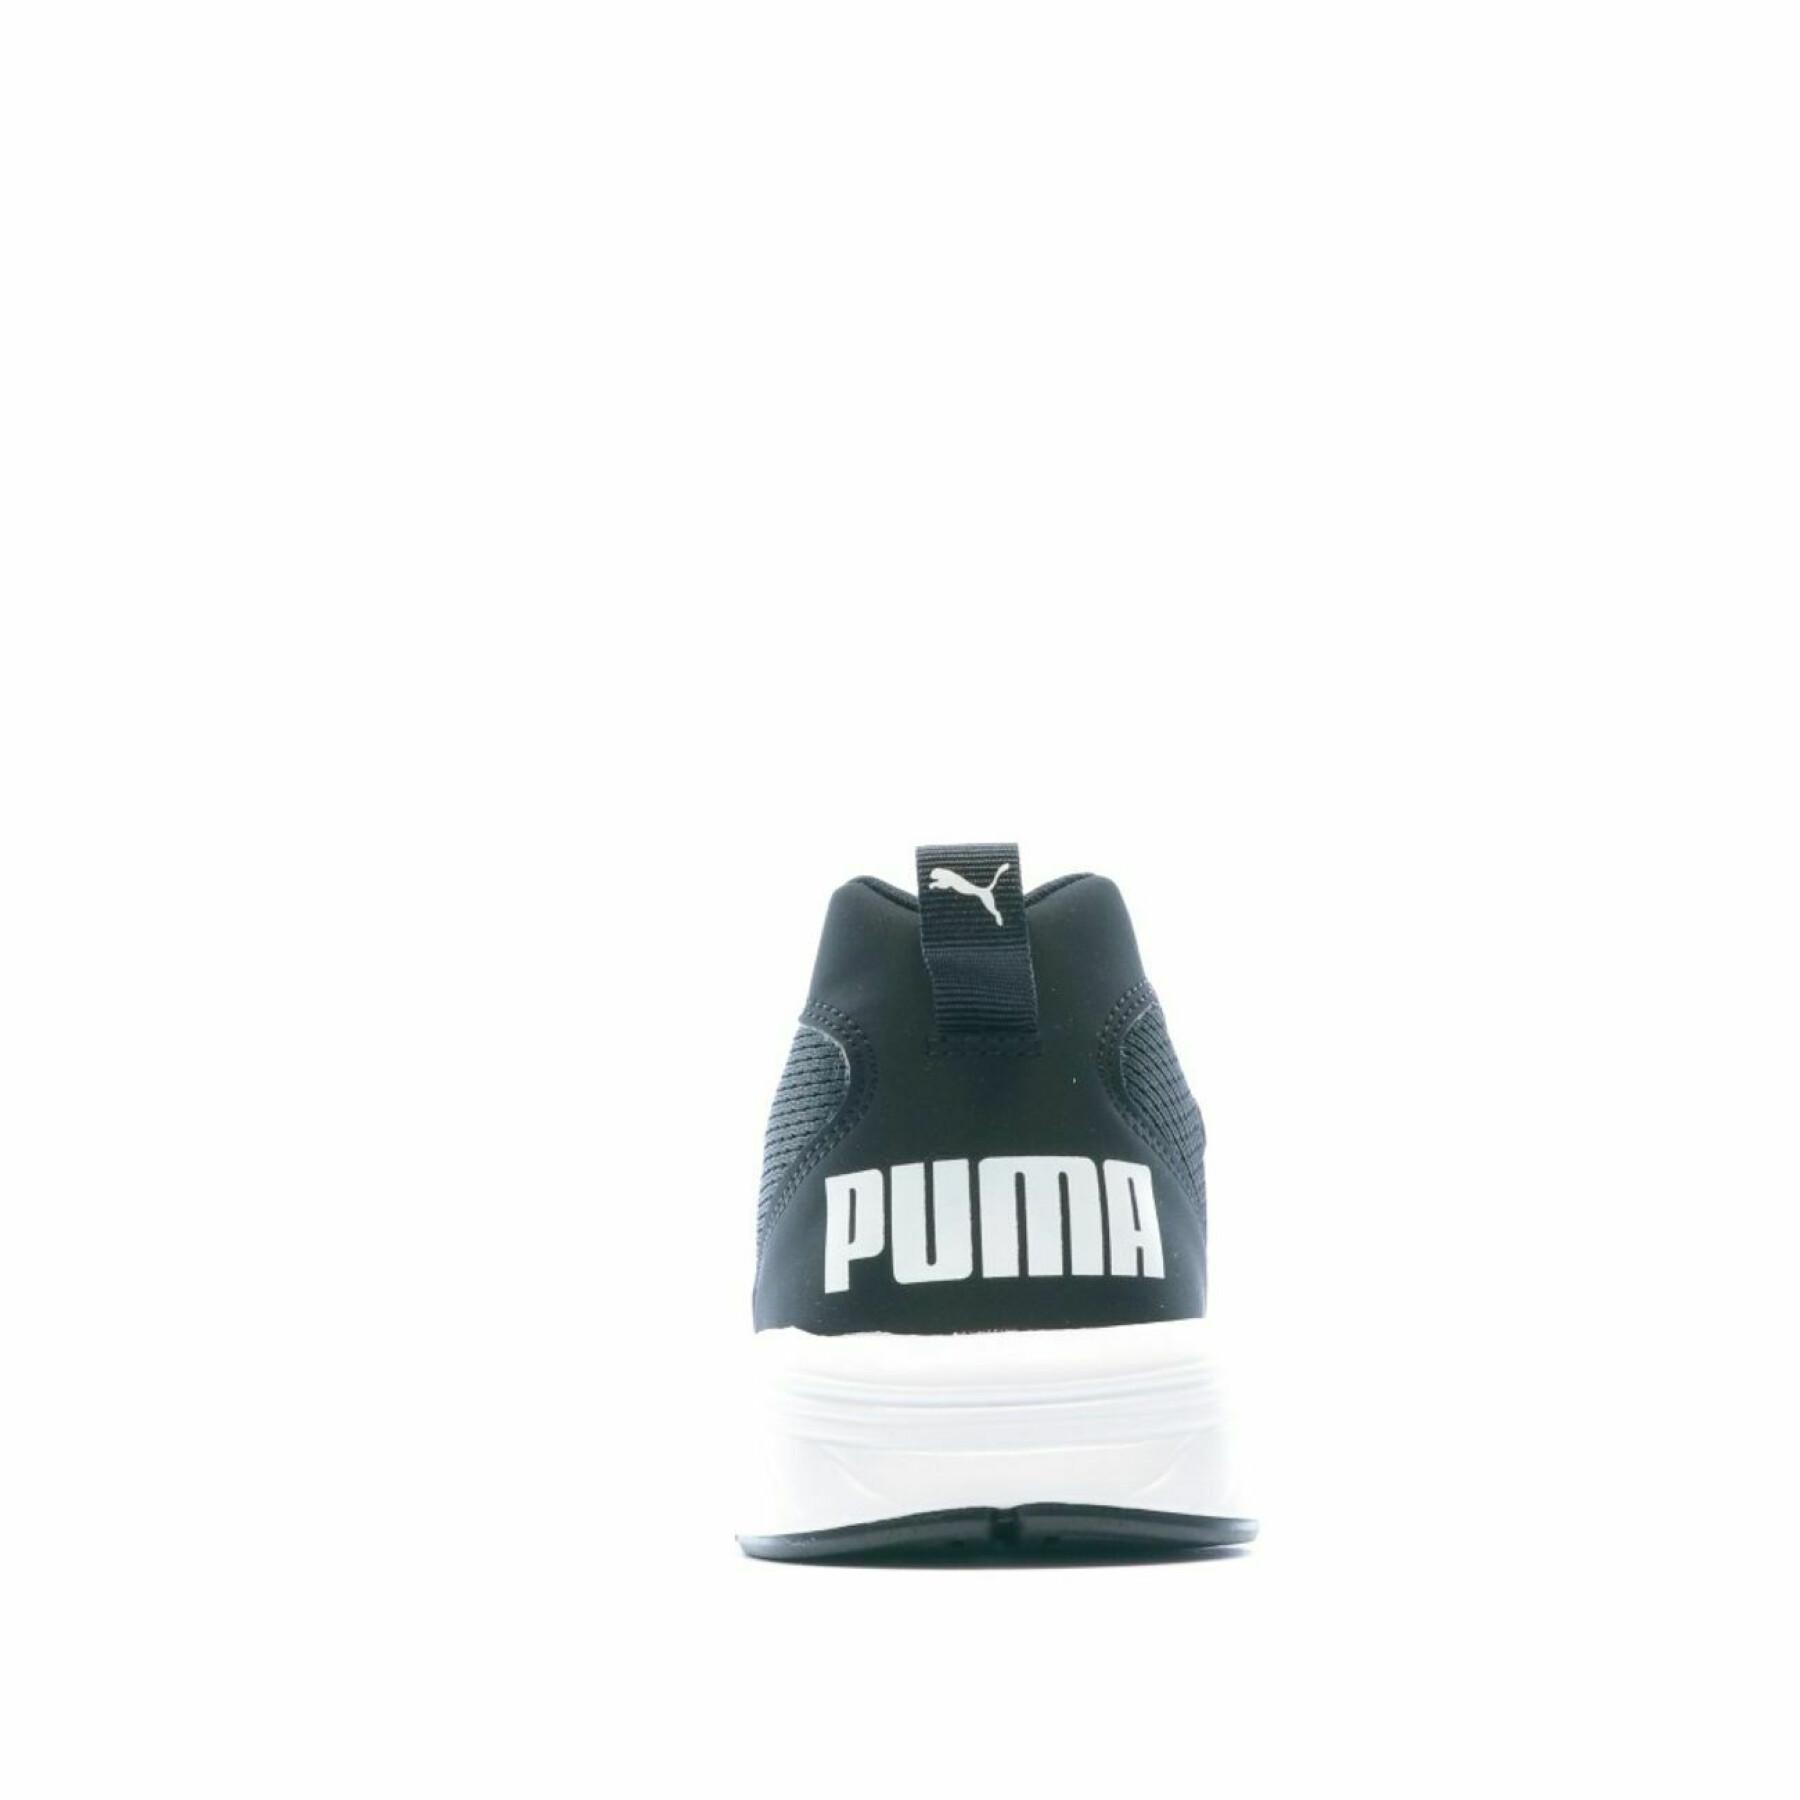 Zapatos Puma Nrgy rupture